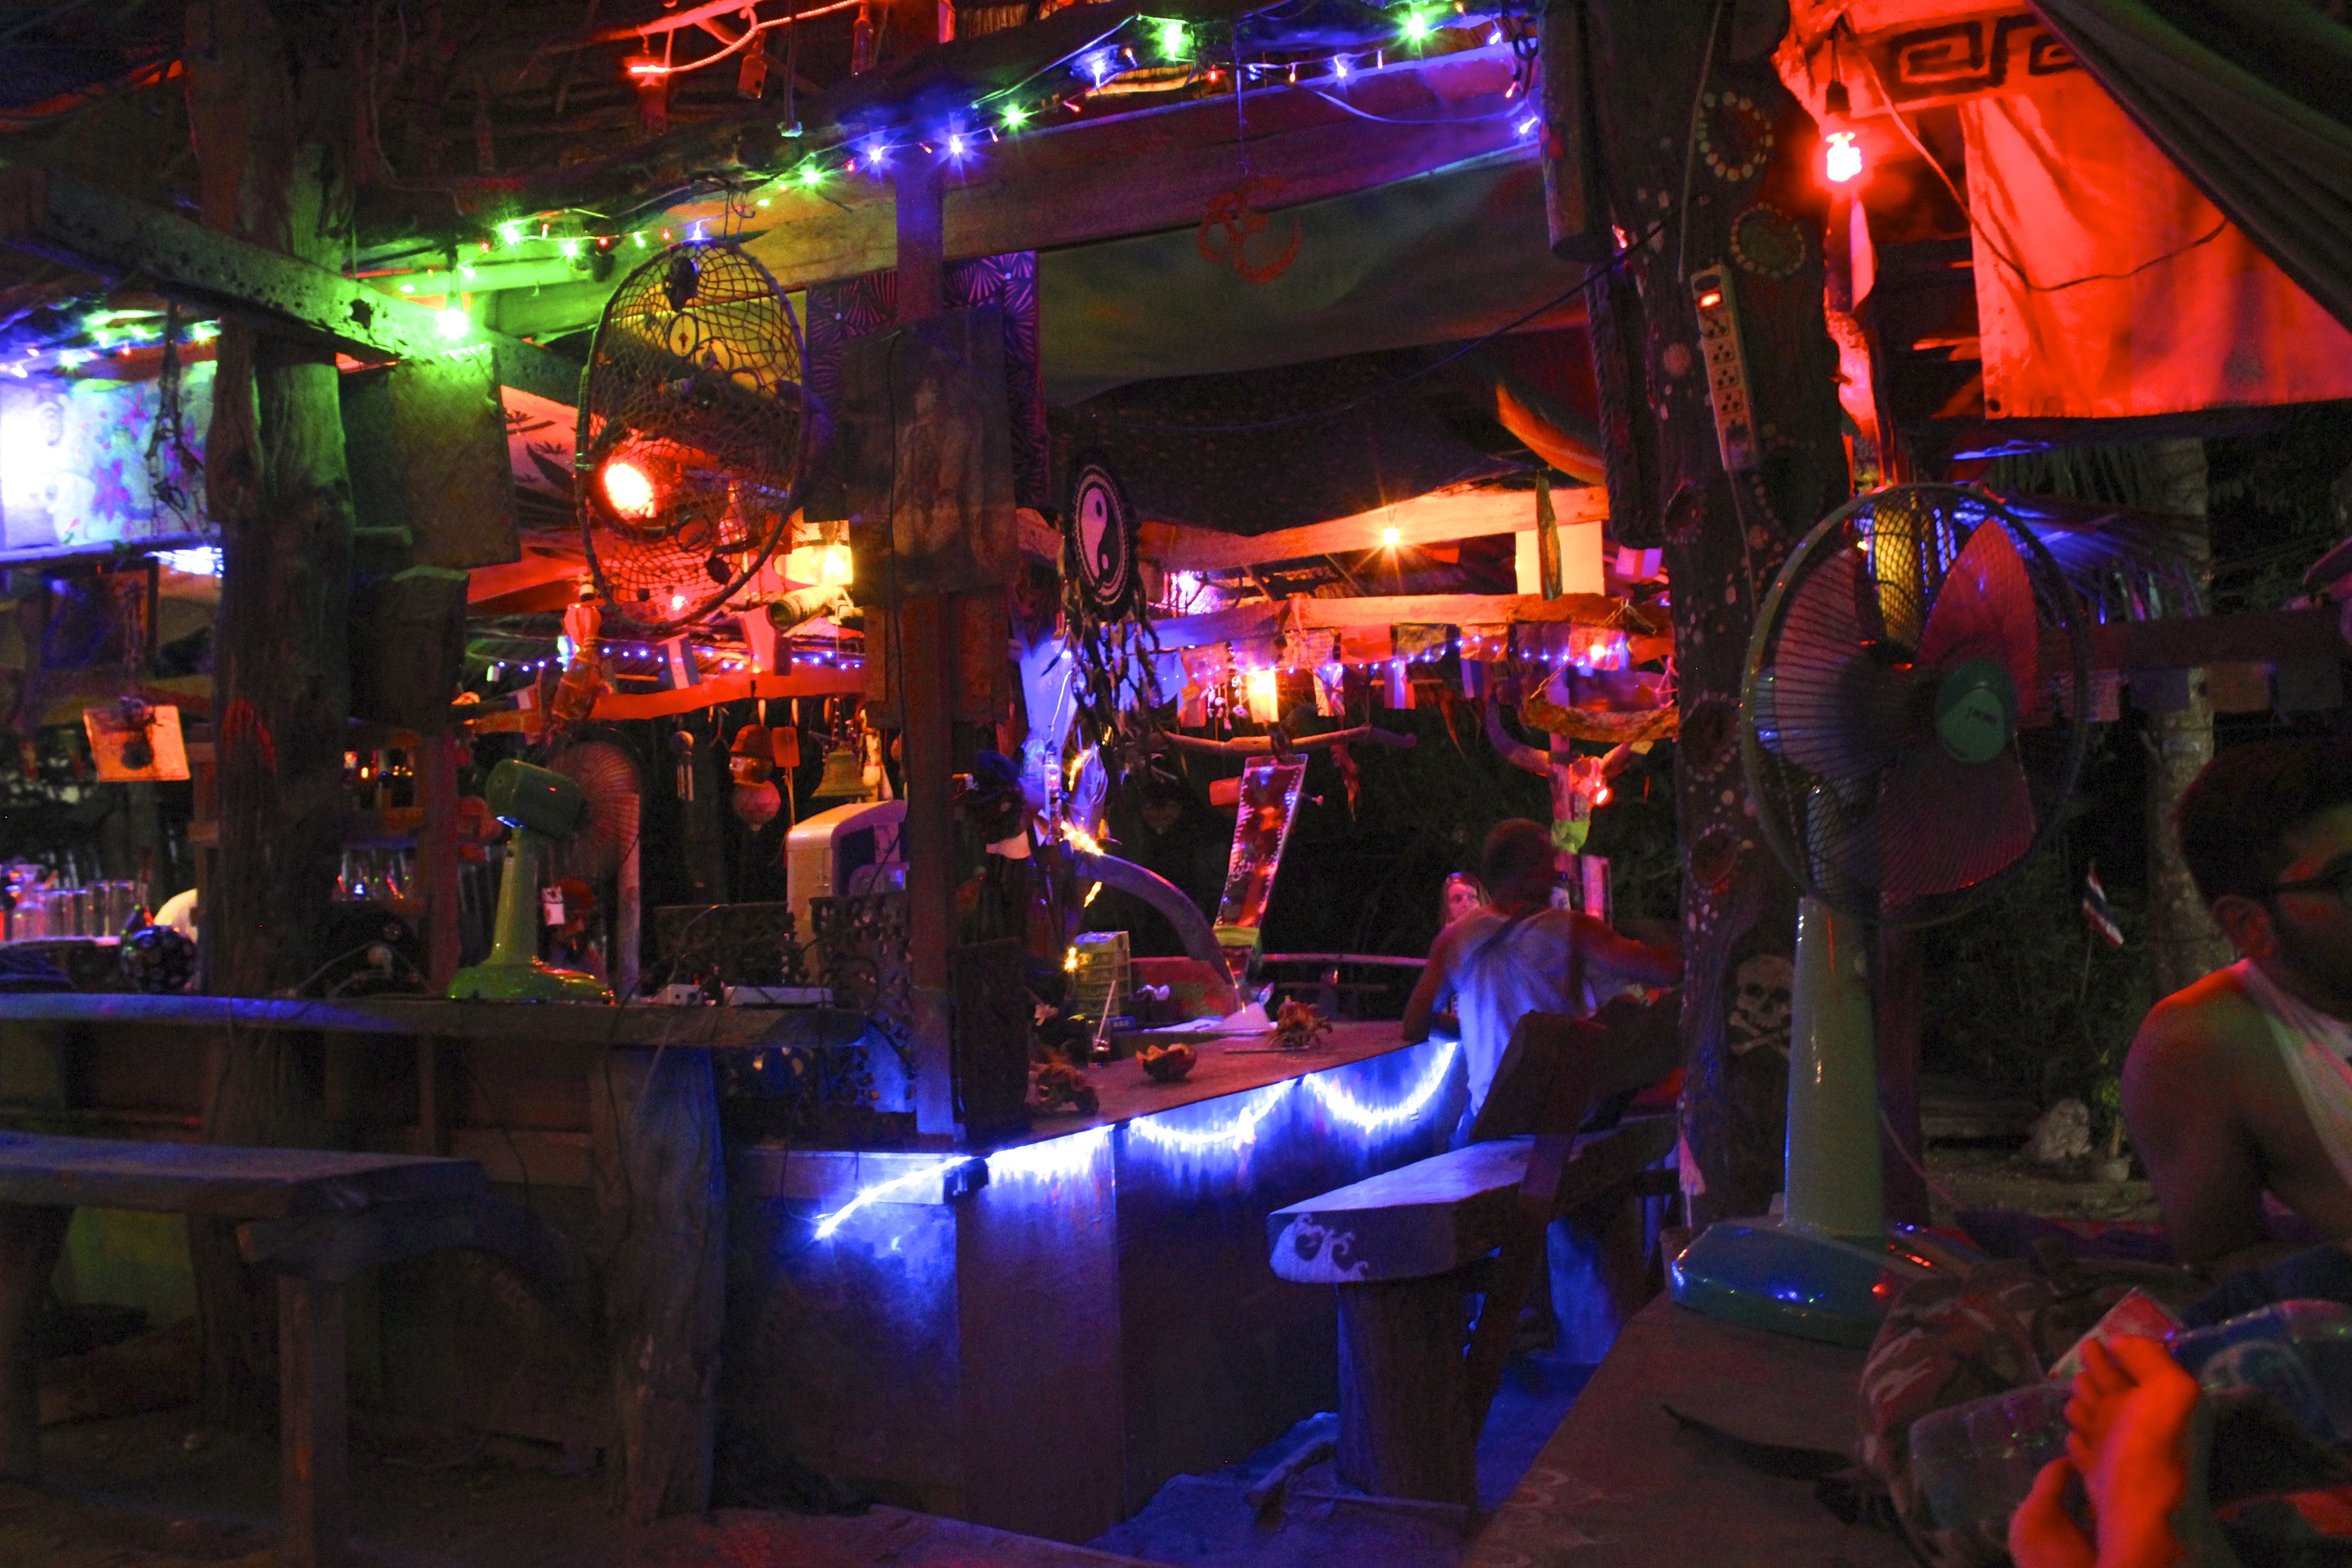 Sunset Pirate Bar all aglow!